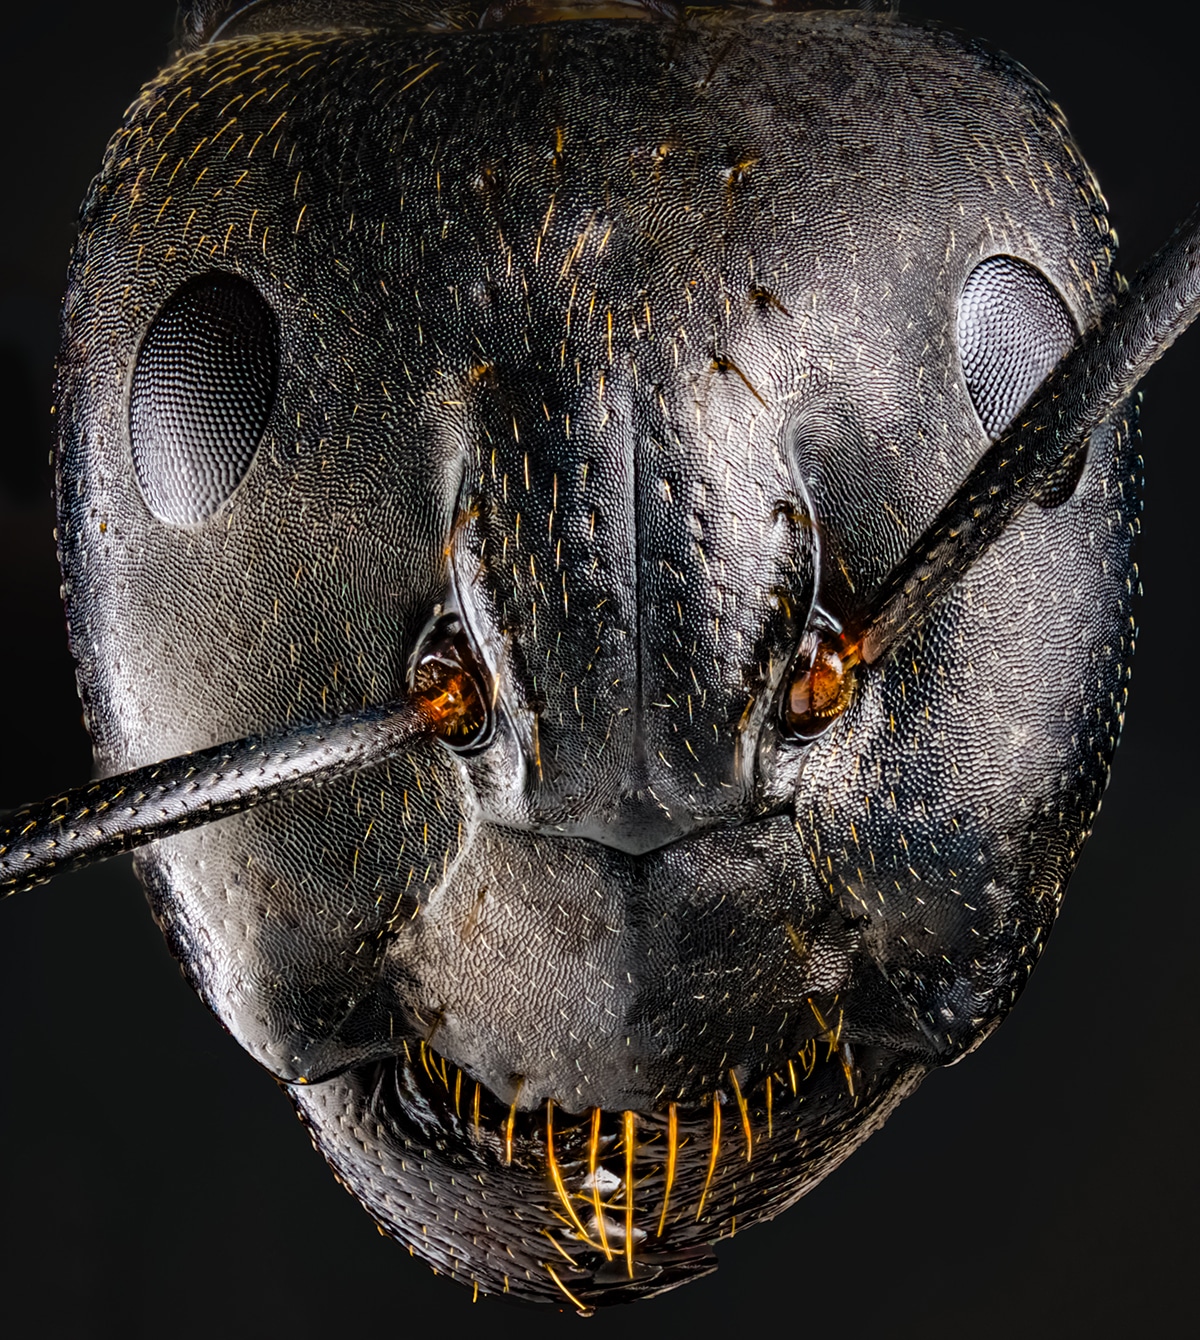 Macro Portrait of an Ant by Josh Coogler